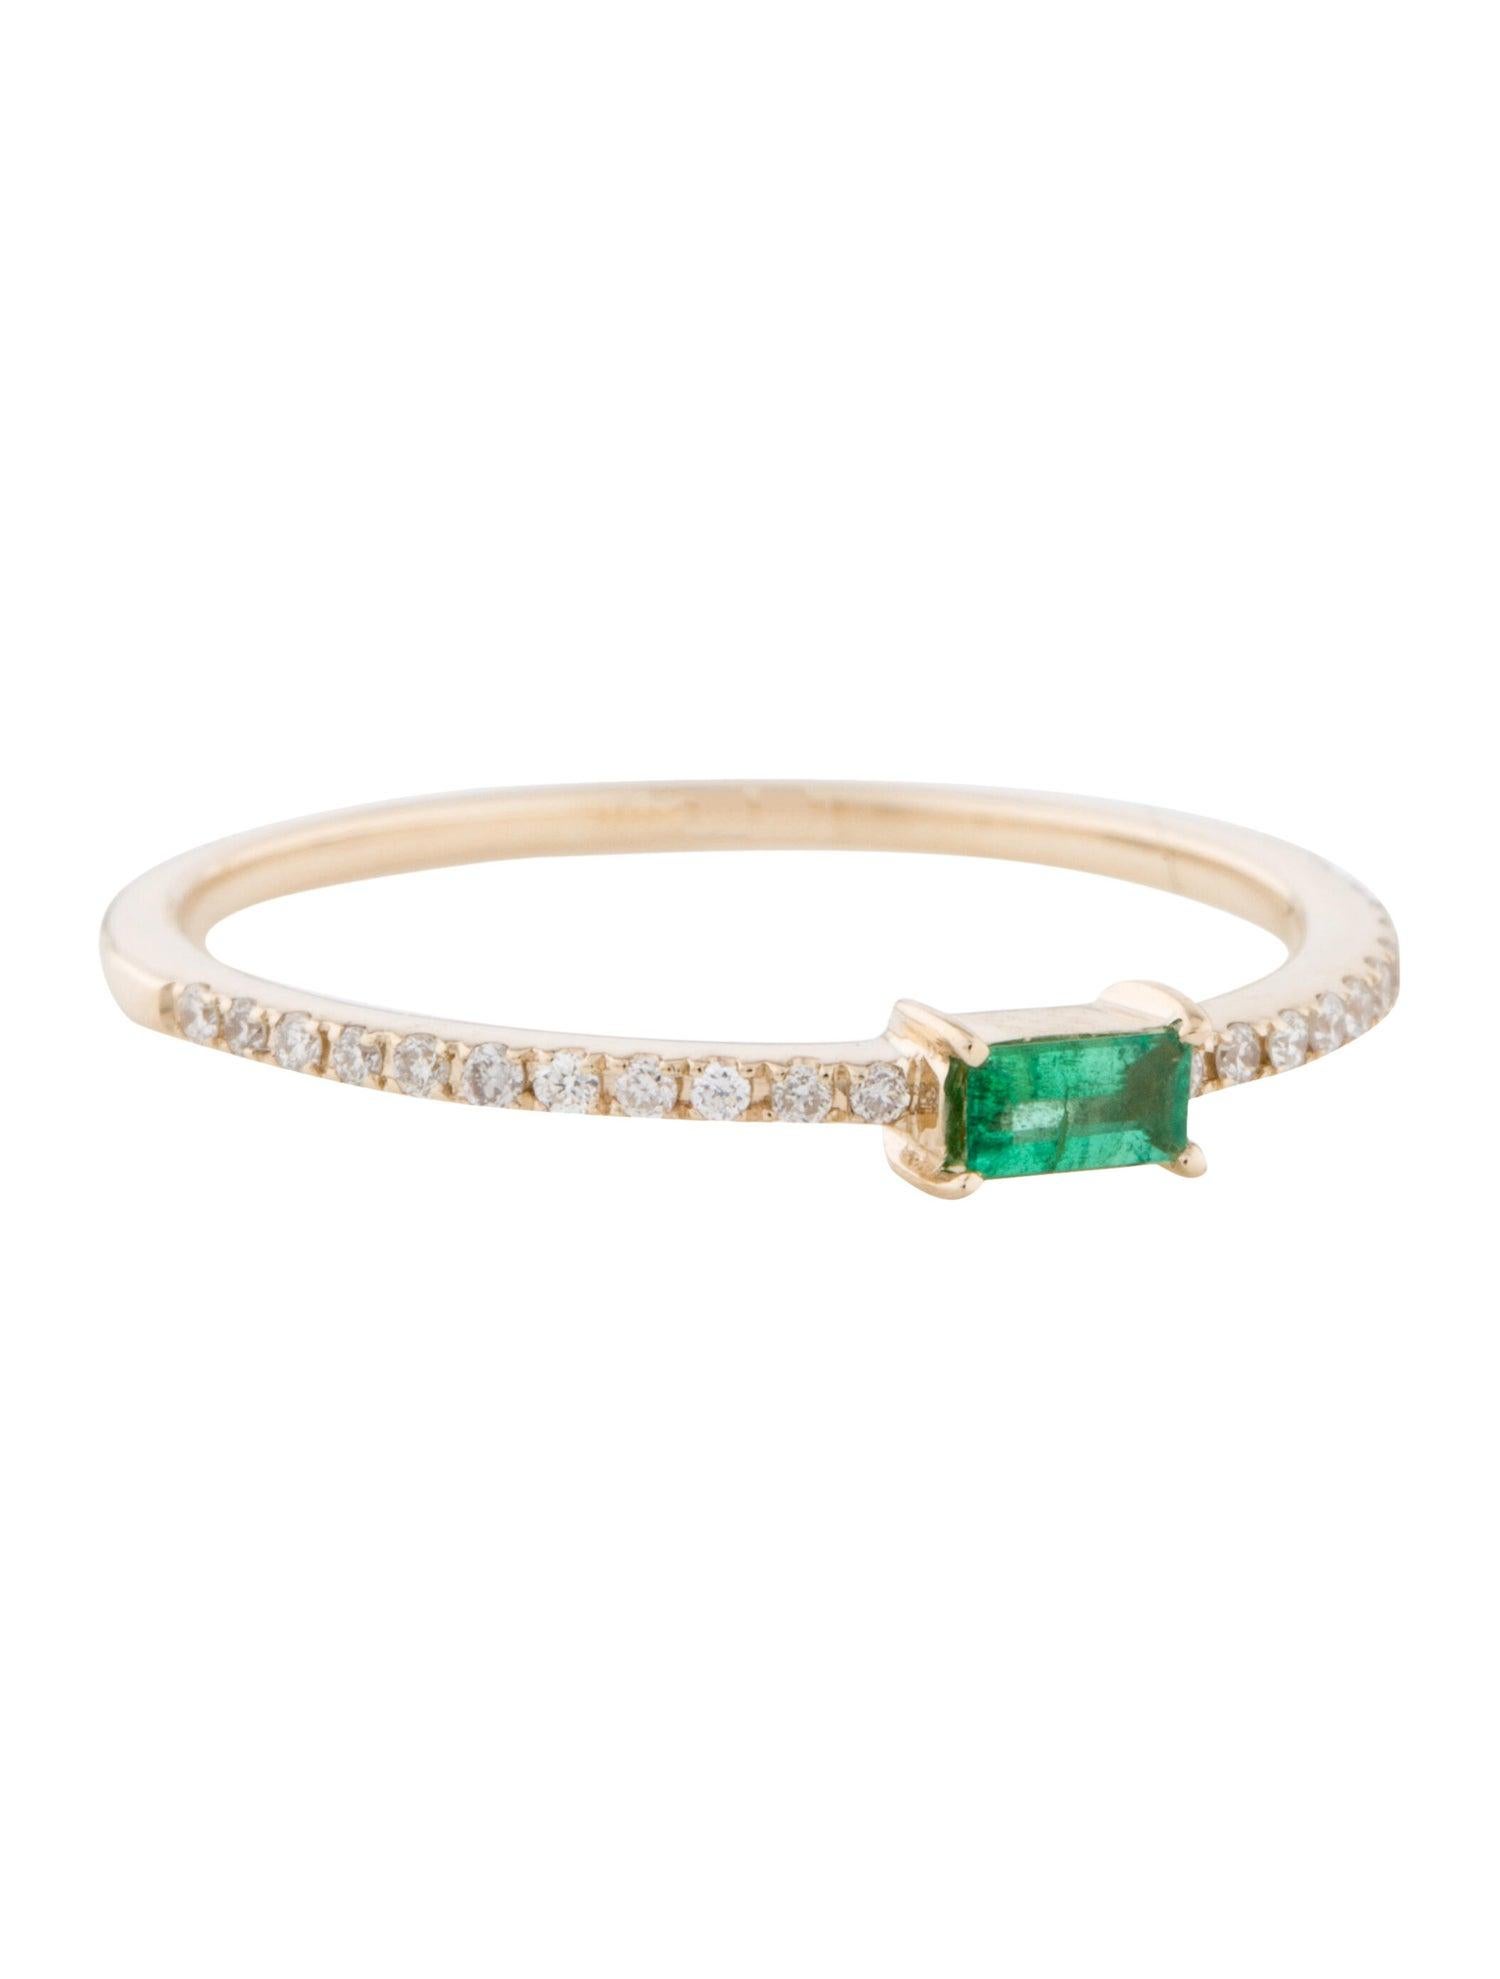 Women's 14 Karat Yellow Gold Green Emerald Stackable Ring Birthstone